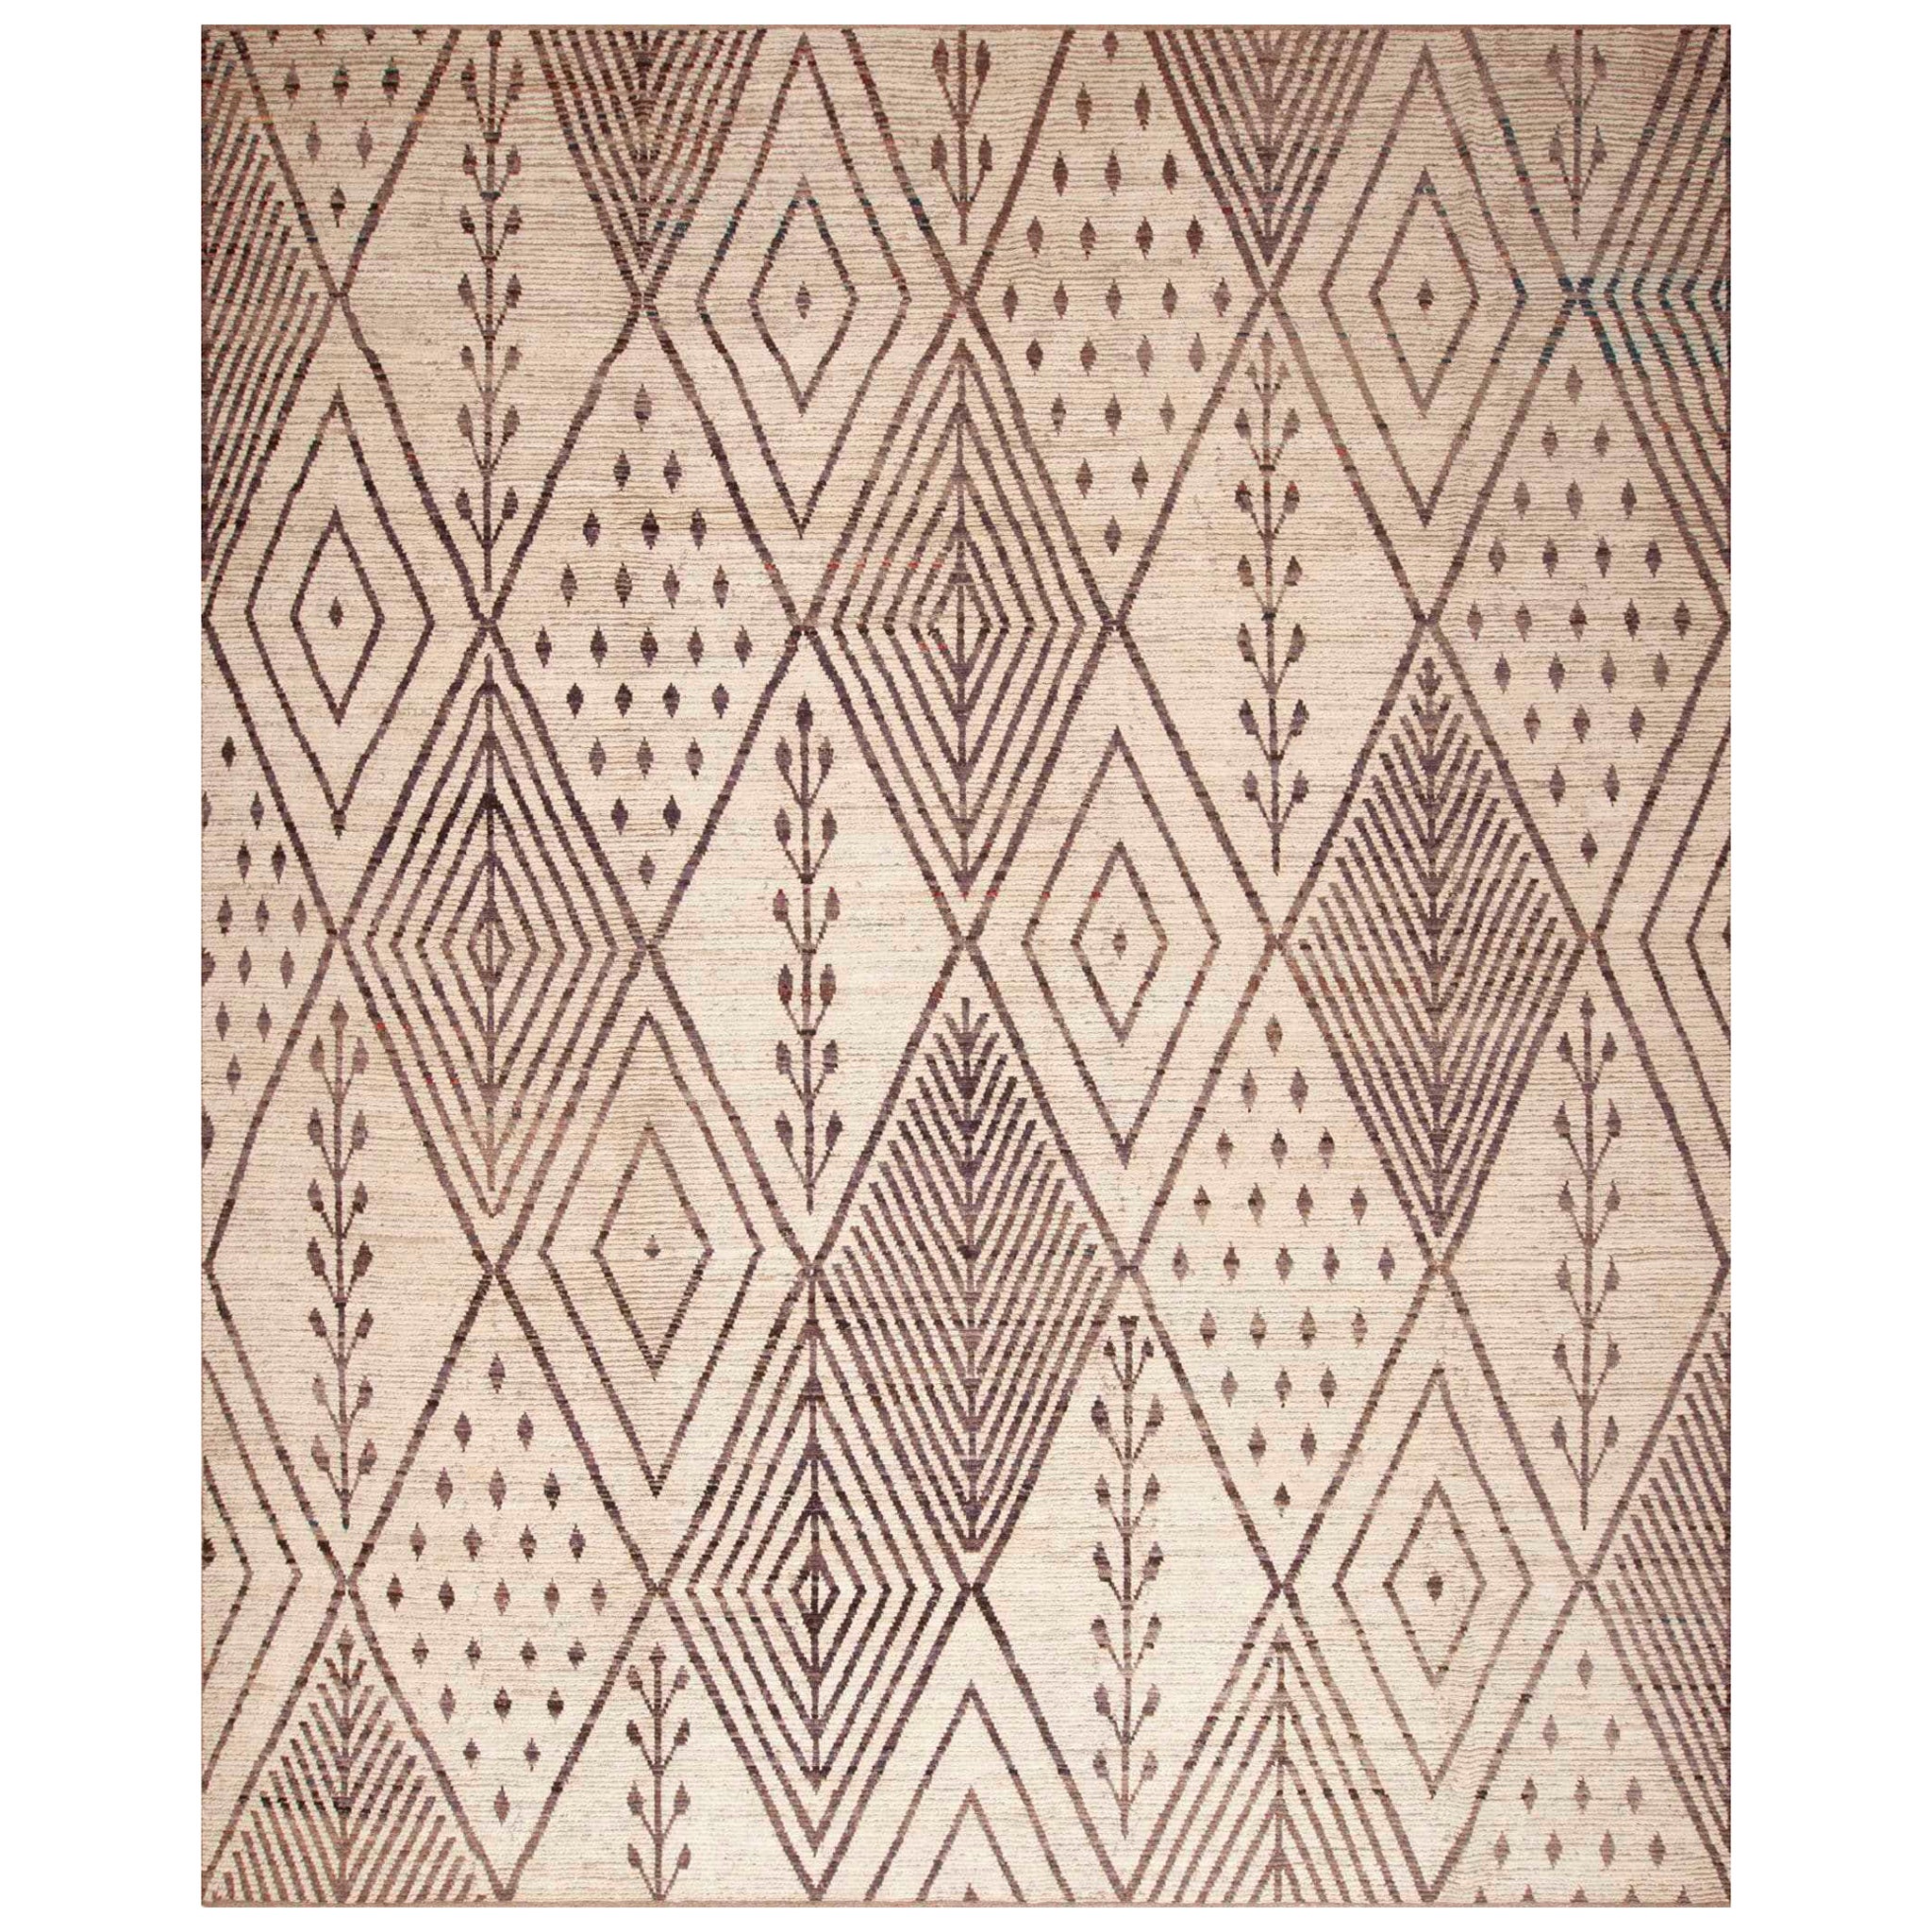 Collection Nazmiyal Tribal Geometric Beni Ourain Design Modern Rug 12' x 15'3" en vente